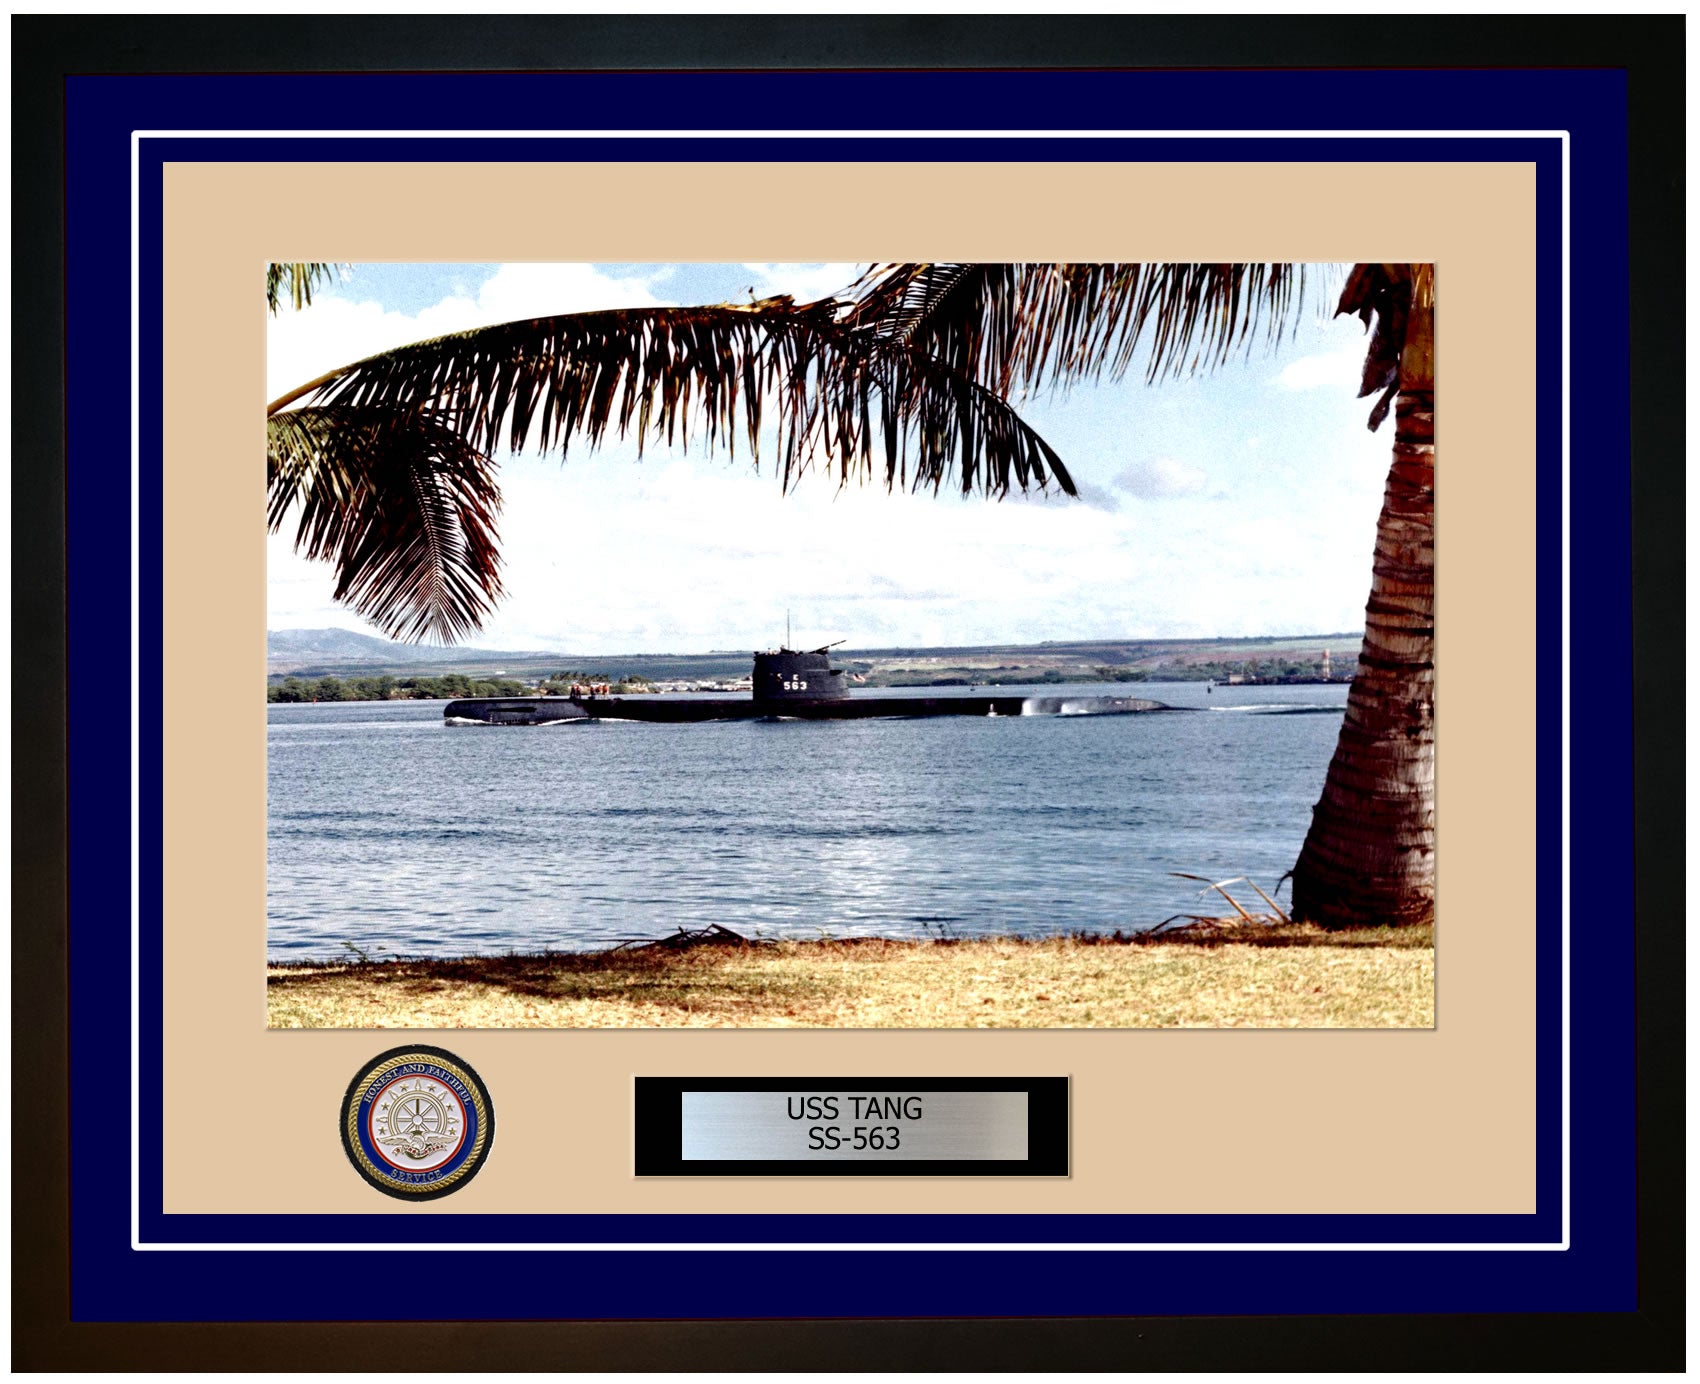 USS Tang SS-563 Framed Navy Ship Photo Blue